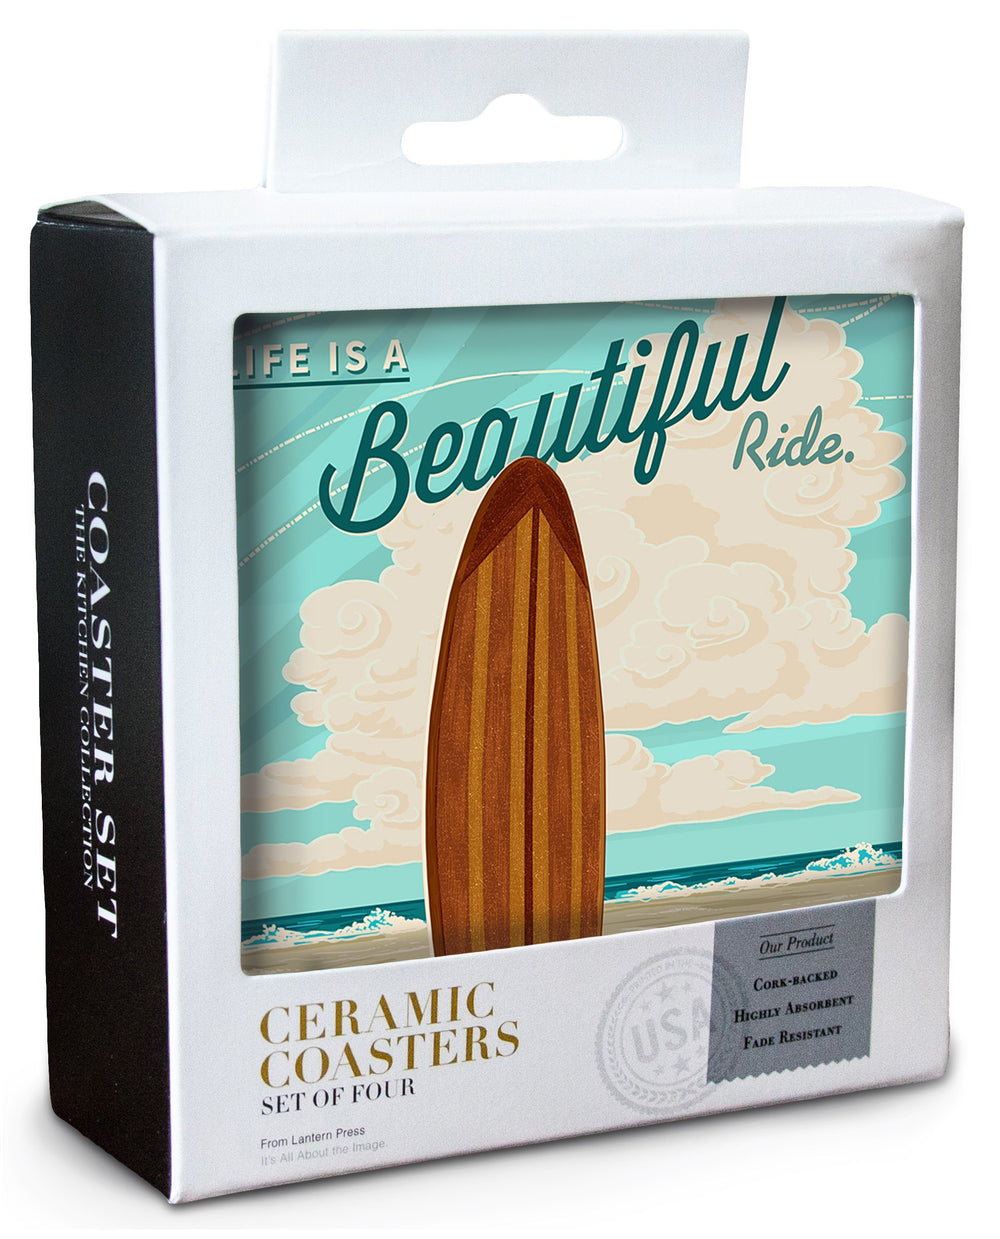 Newport Beach, California, Surf Board Letterpress, Life is a Beautiful Ride, Lantern Press Art, Coaster Set Coasters Lantern Press 